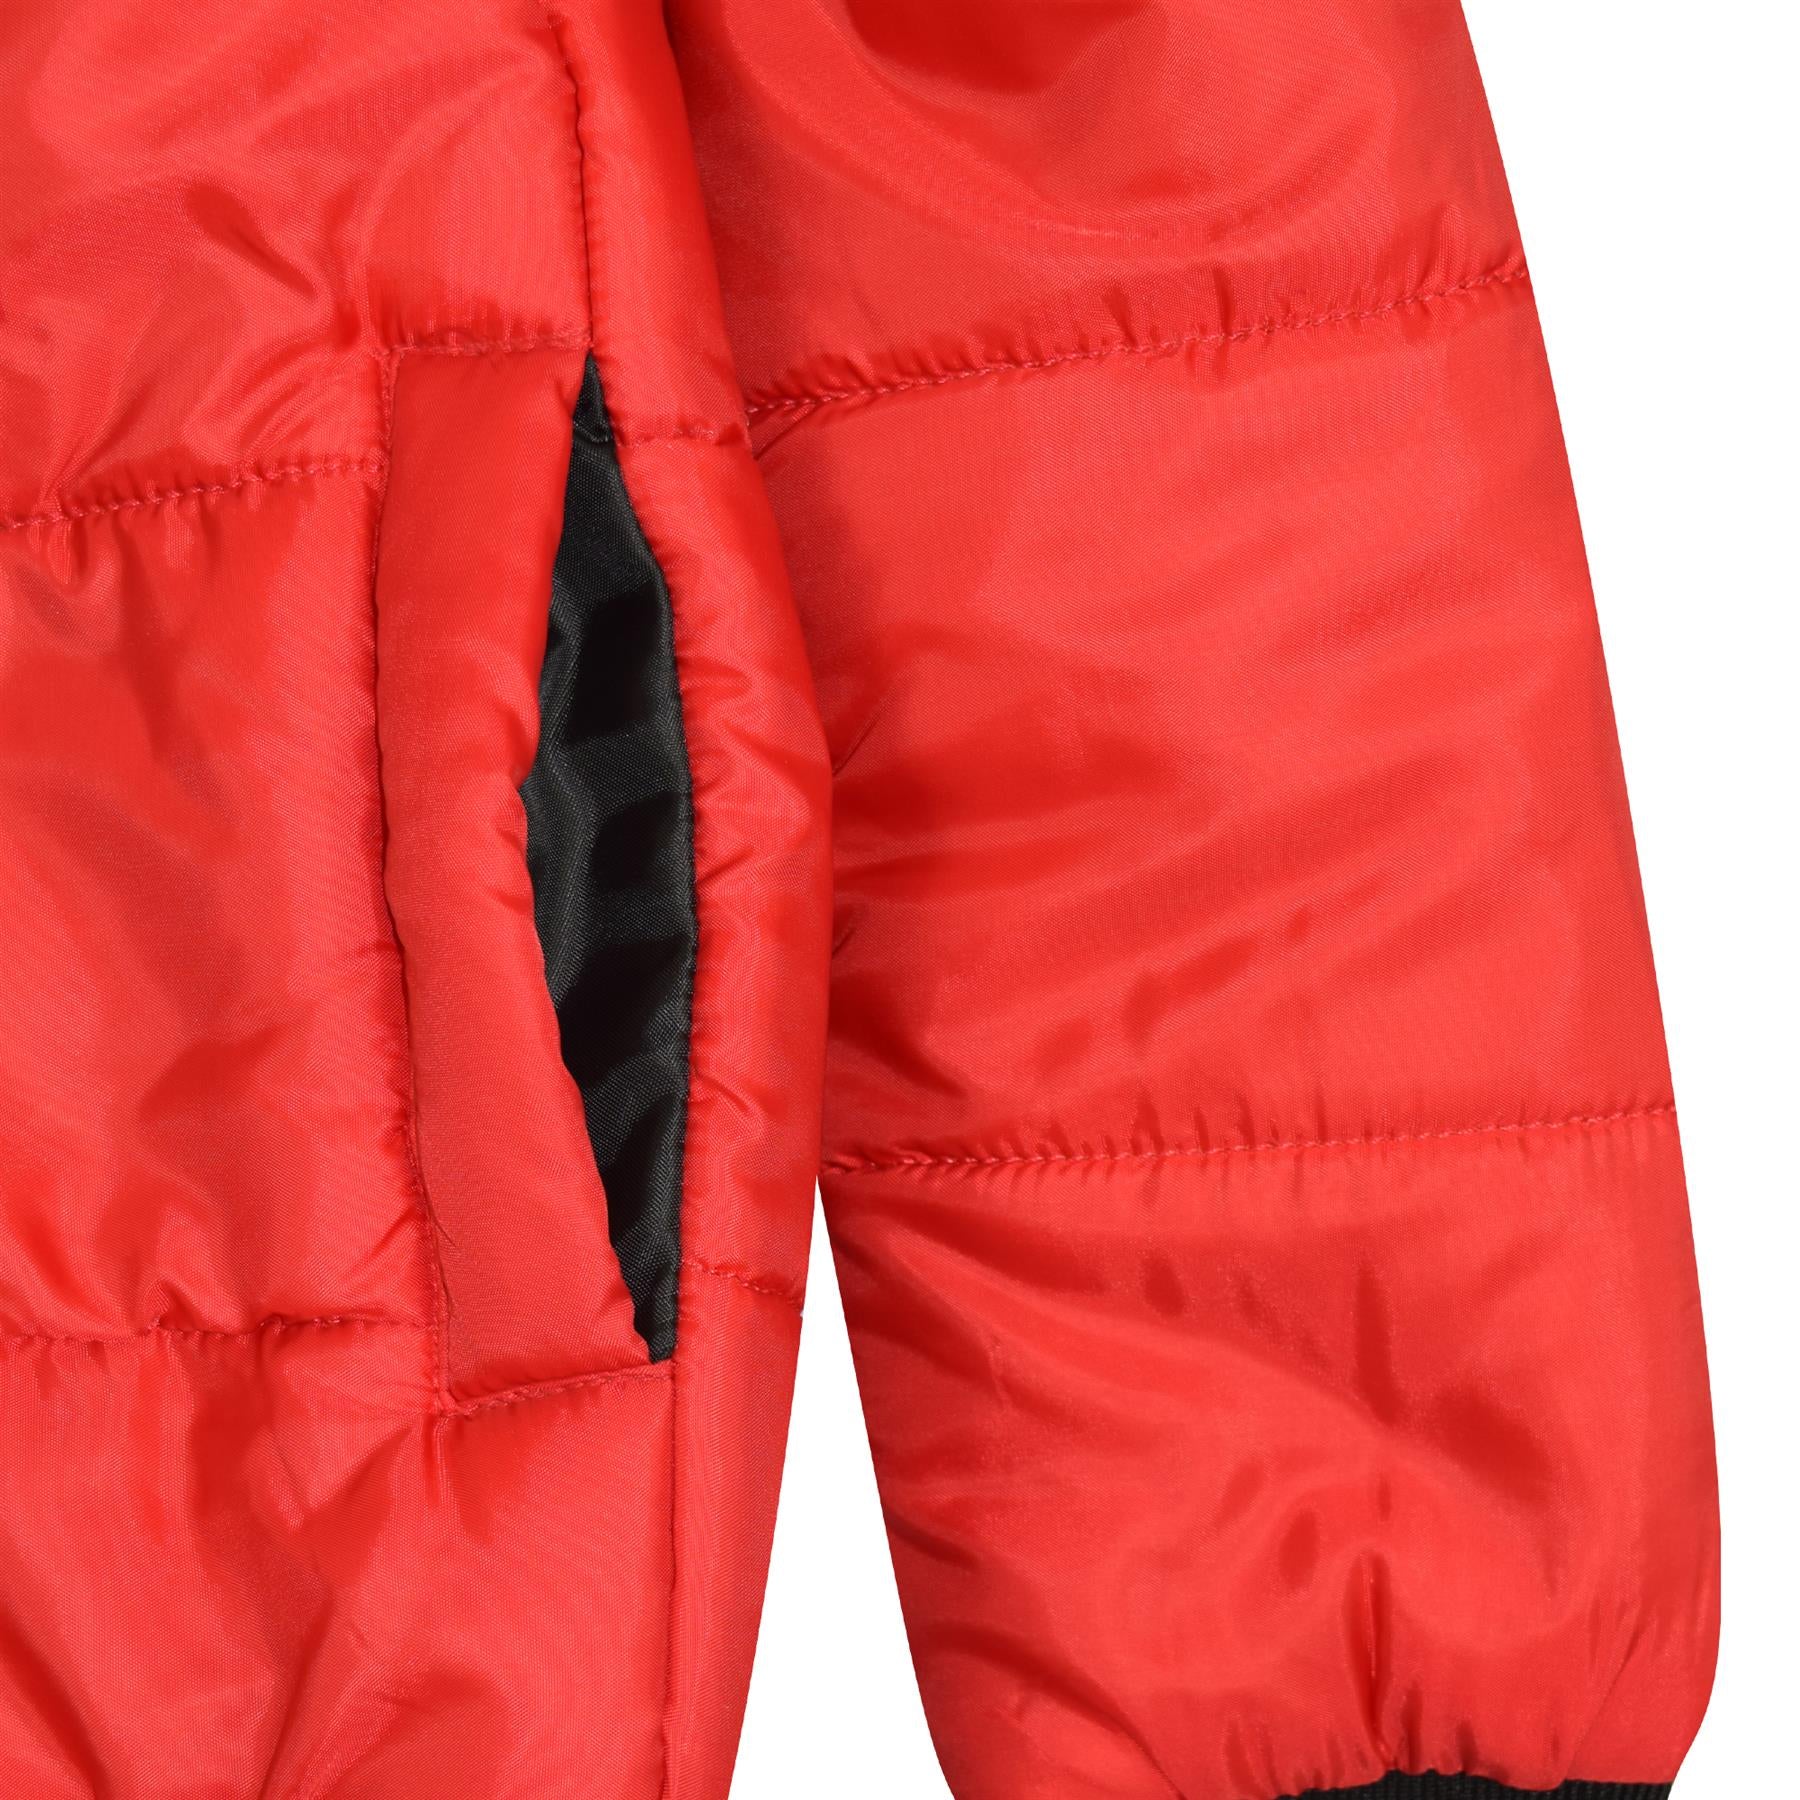 Kids Bomber Jacket Lightweight Puffer Coat School Fashion For Girls Boys 5-13 Yr